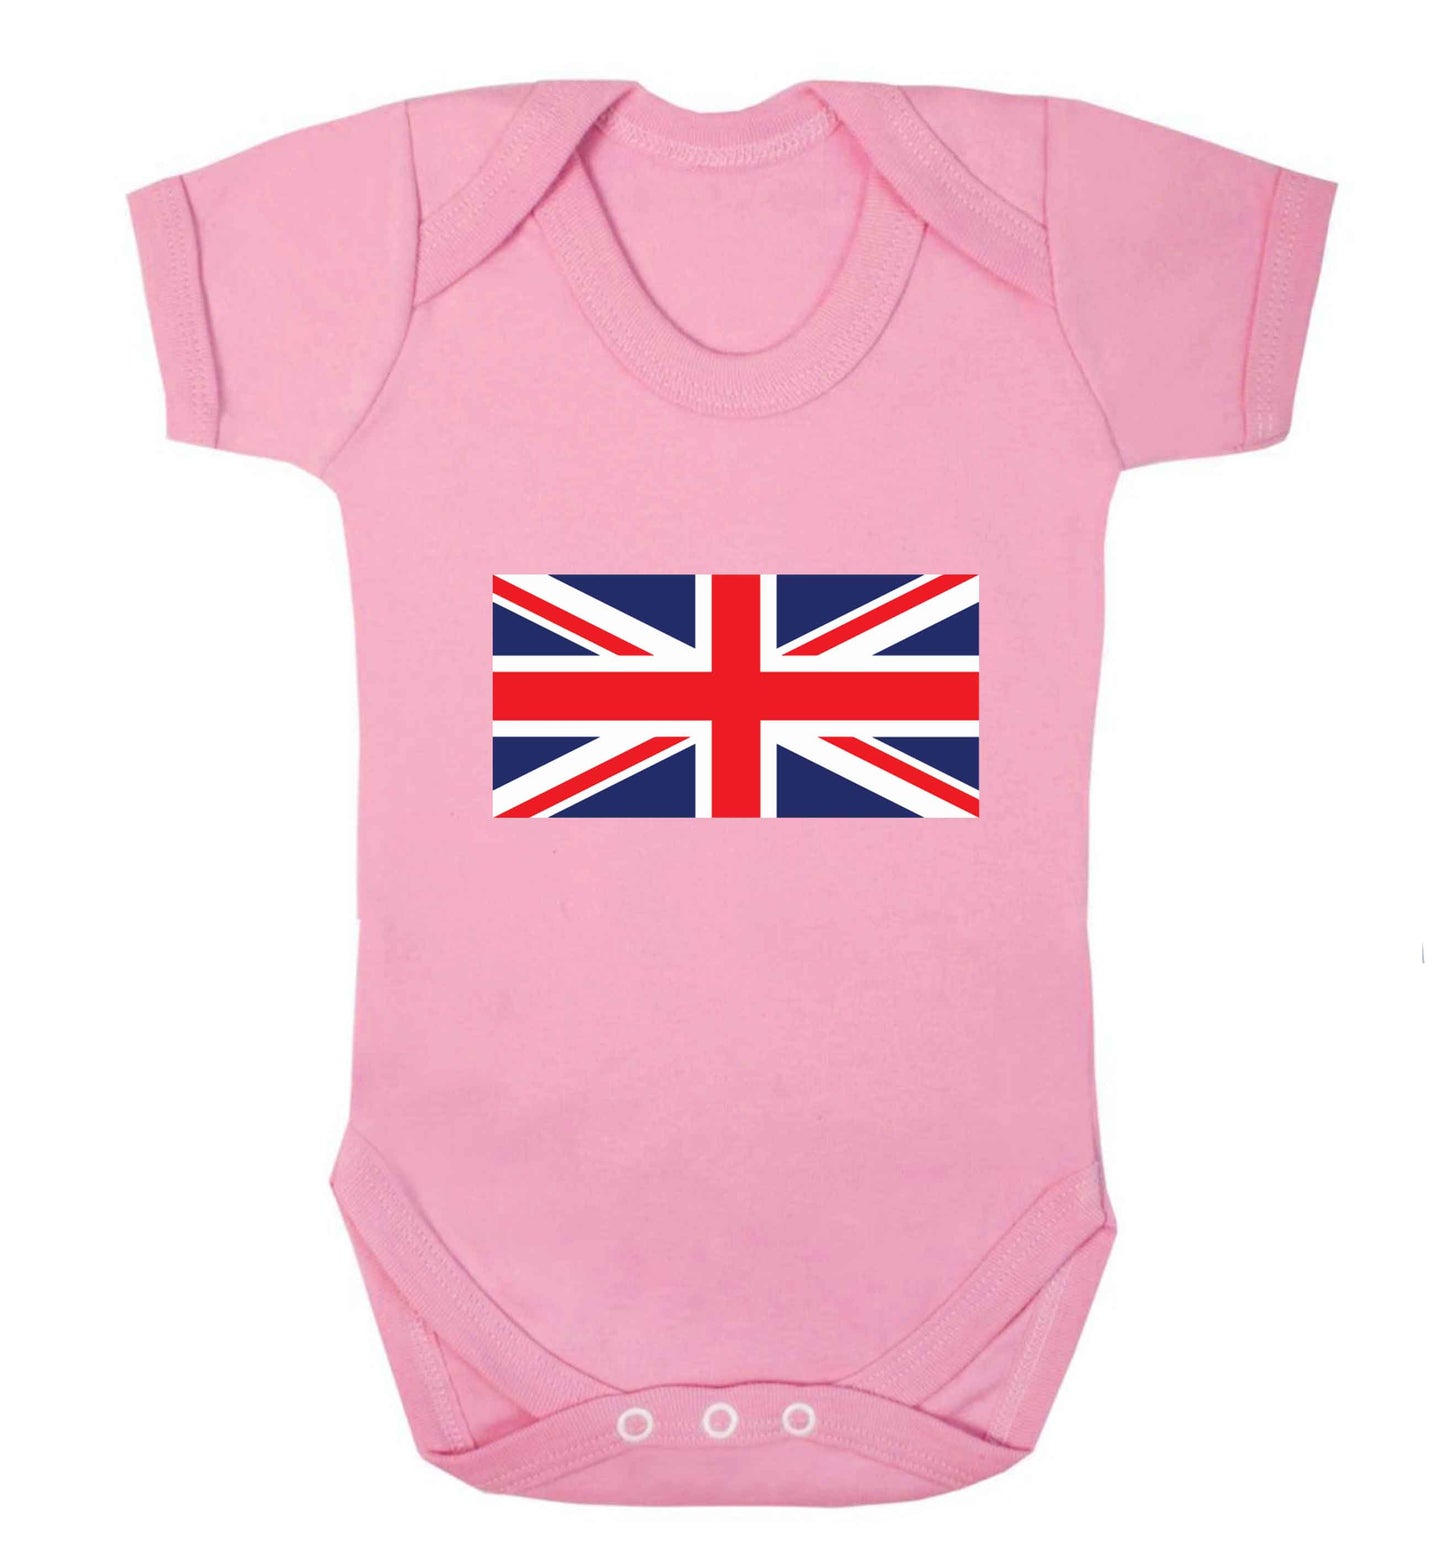 Union Jack baby vest pale pink 18-24 months